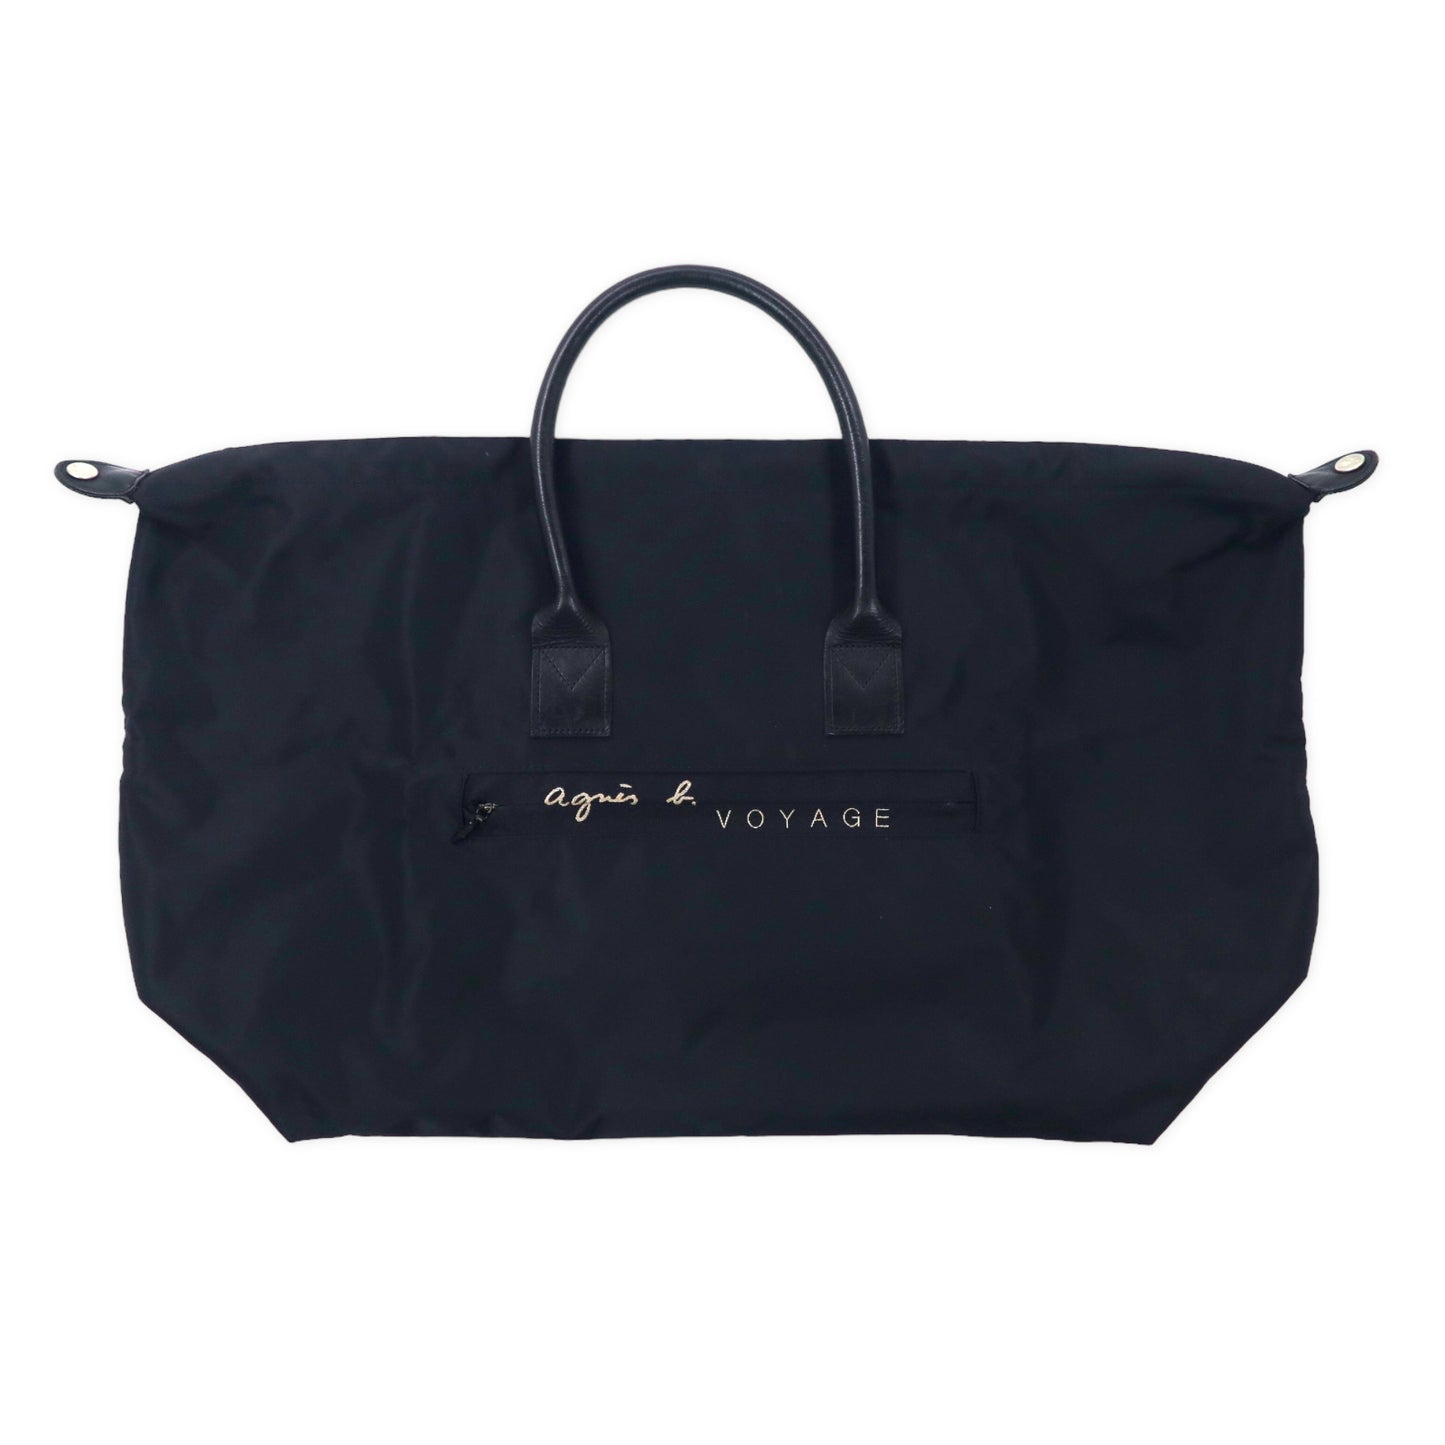 agnes b. Voyage Nylon tote bag handbag black leather handle Japan